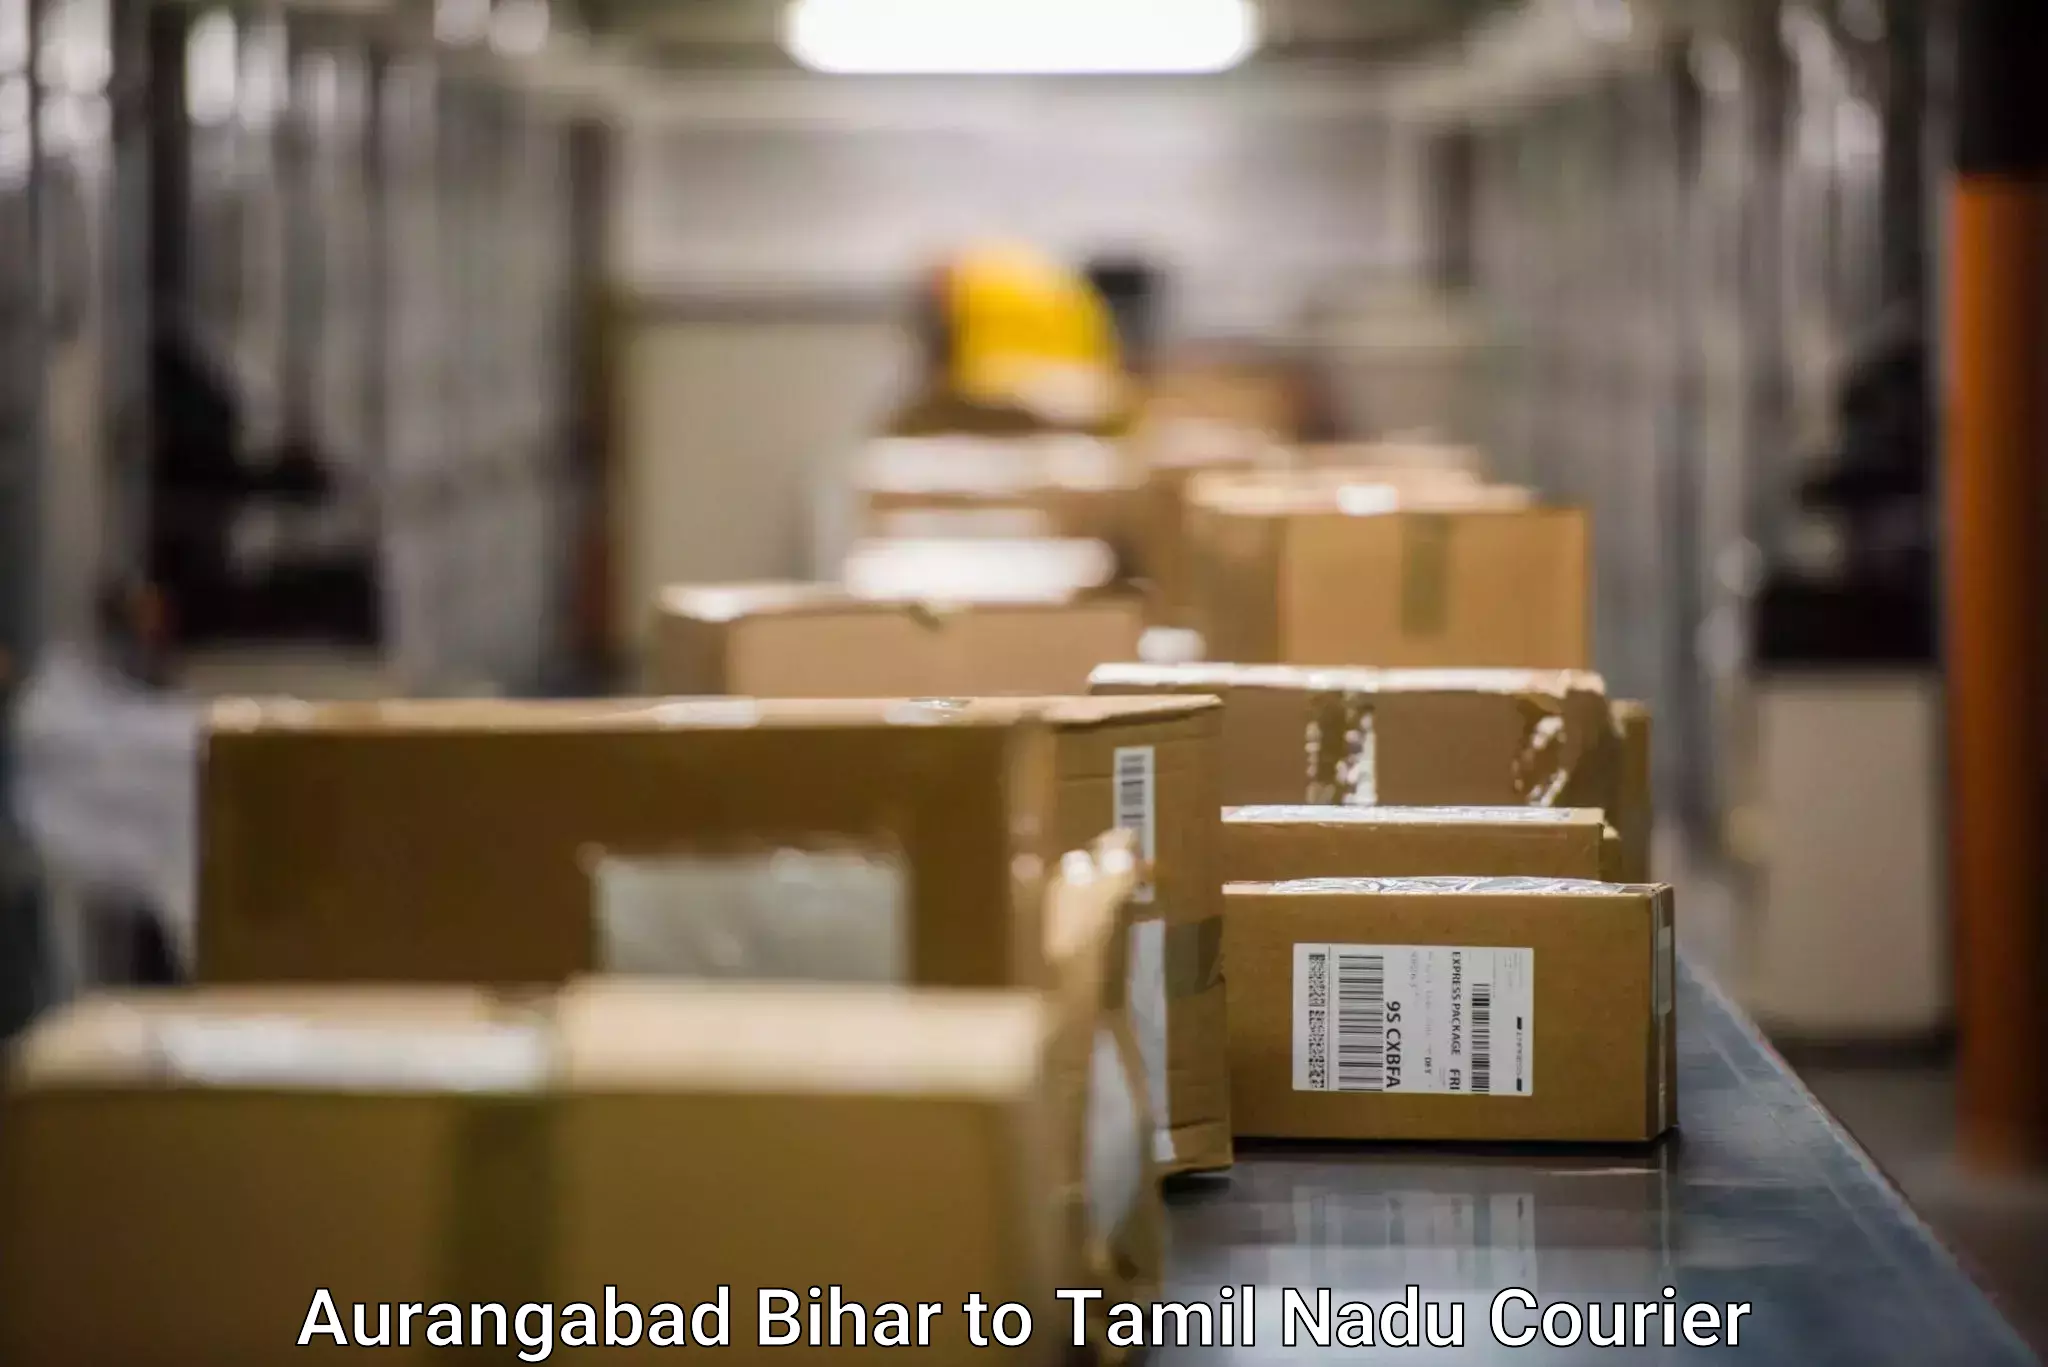 Courier insurance Aurangabad Bihar to Tamil Nadu